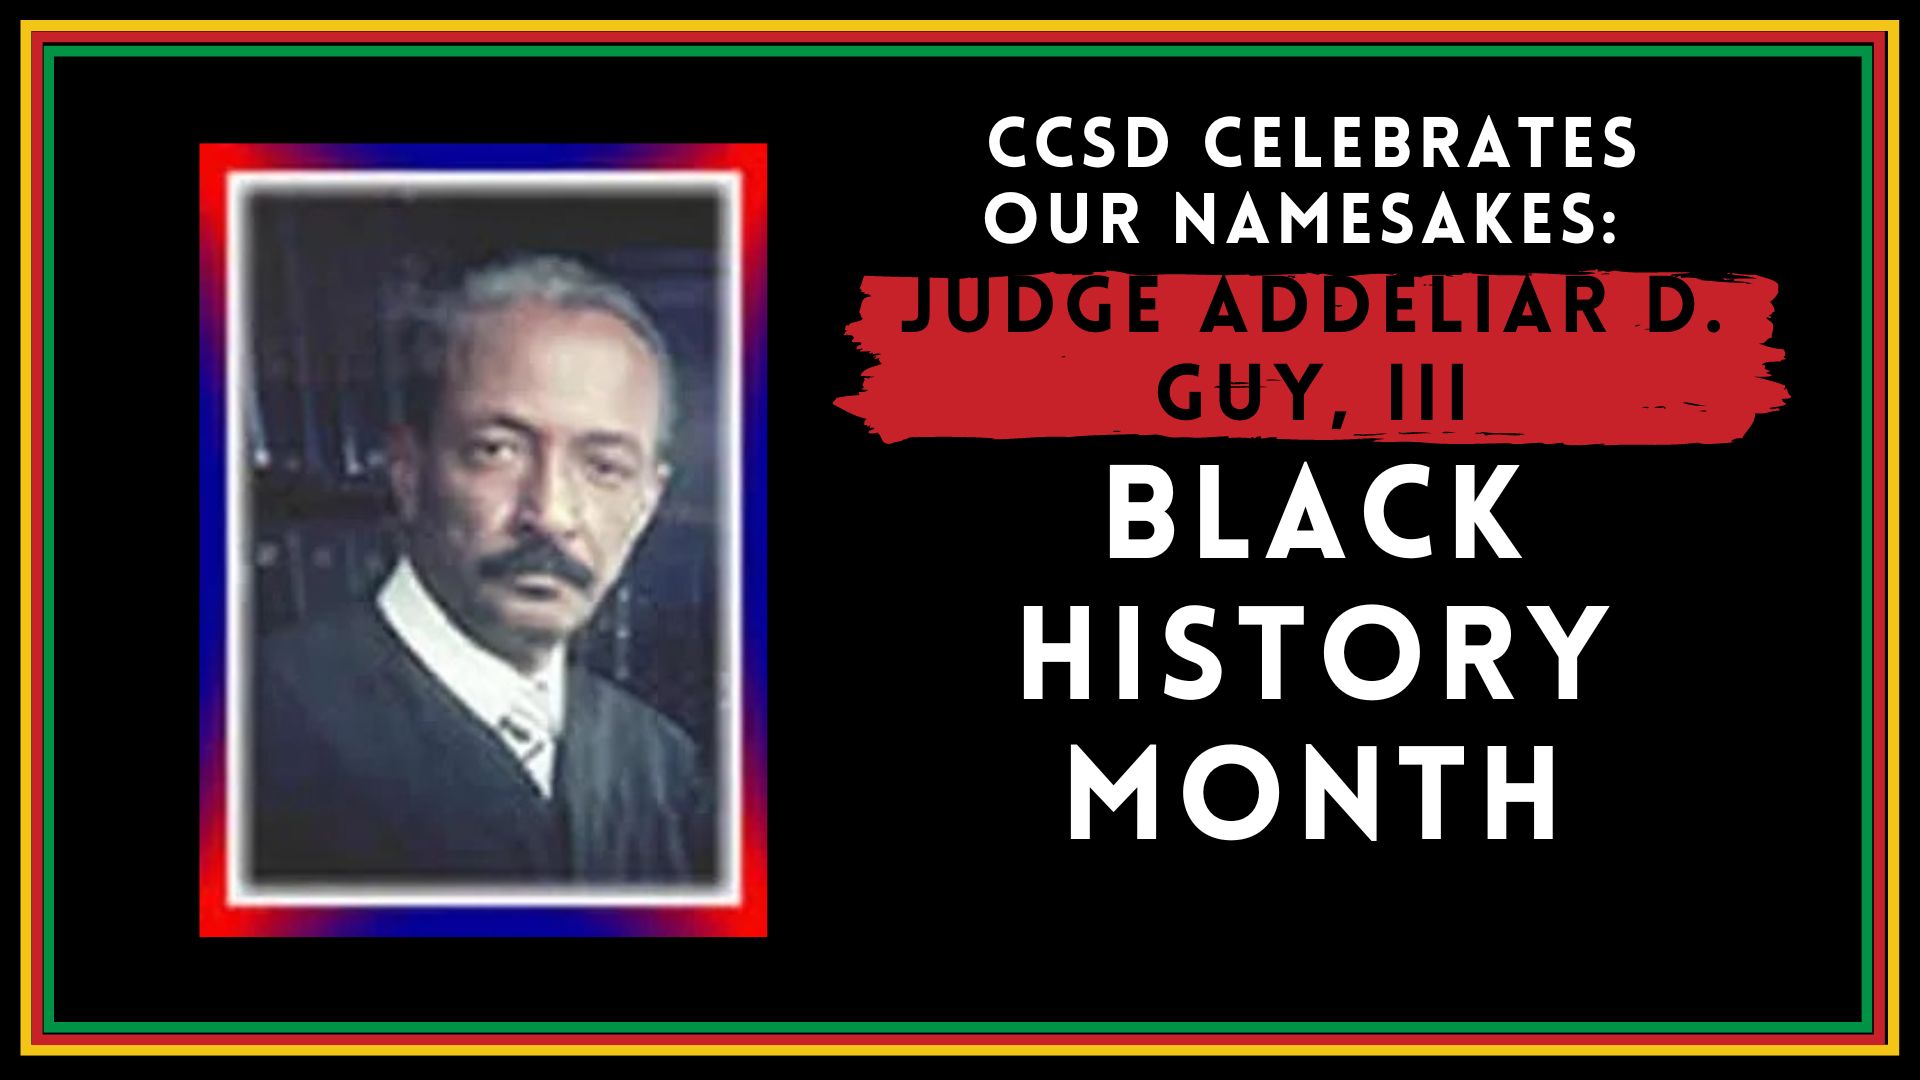 CCSD celebrates its namesakes: Judge Addeliar D Guy, III